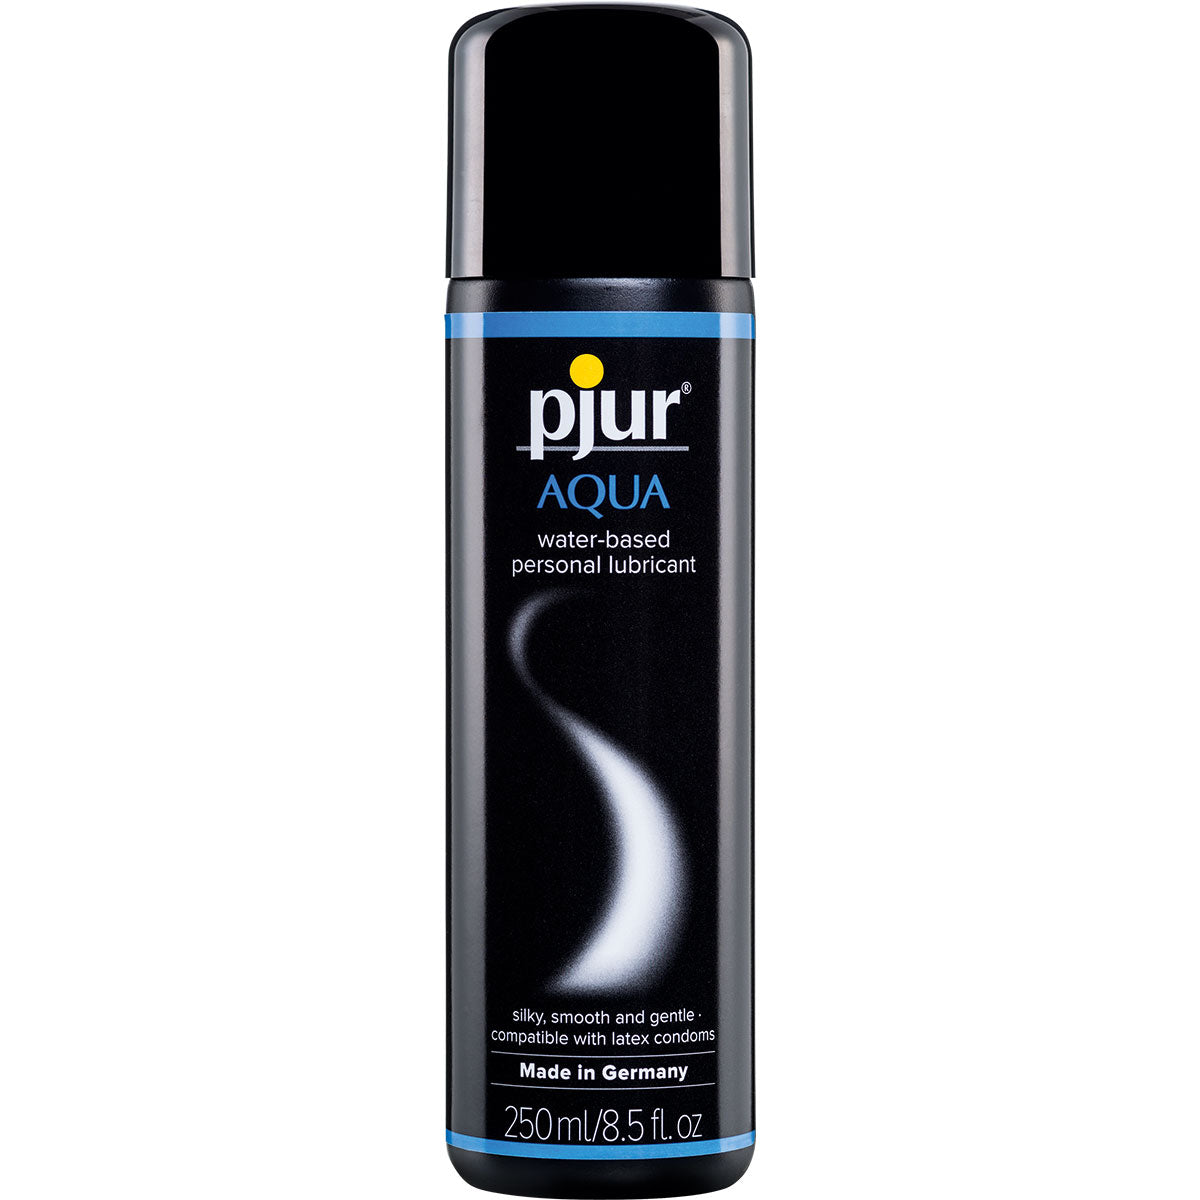 Pjur Aqua Premium Water-Based Personal Lubricant - 250ml